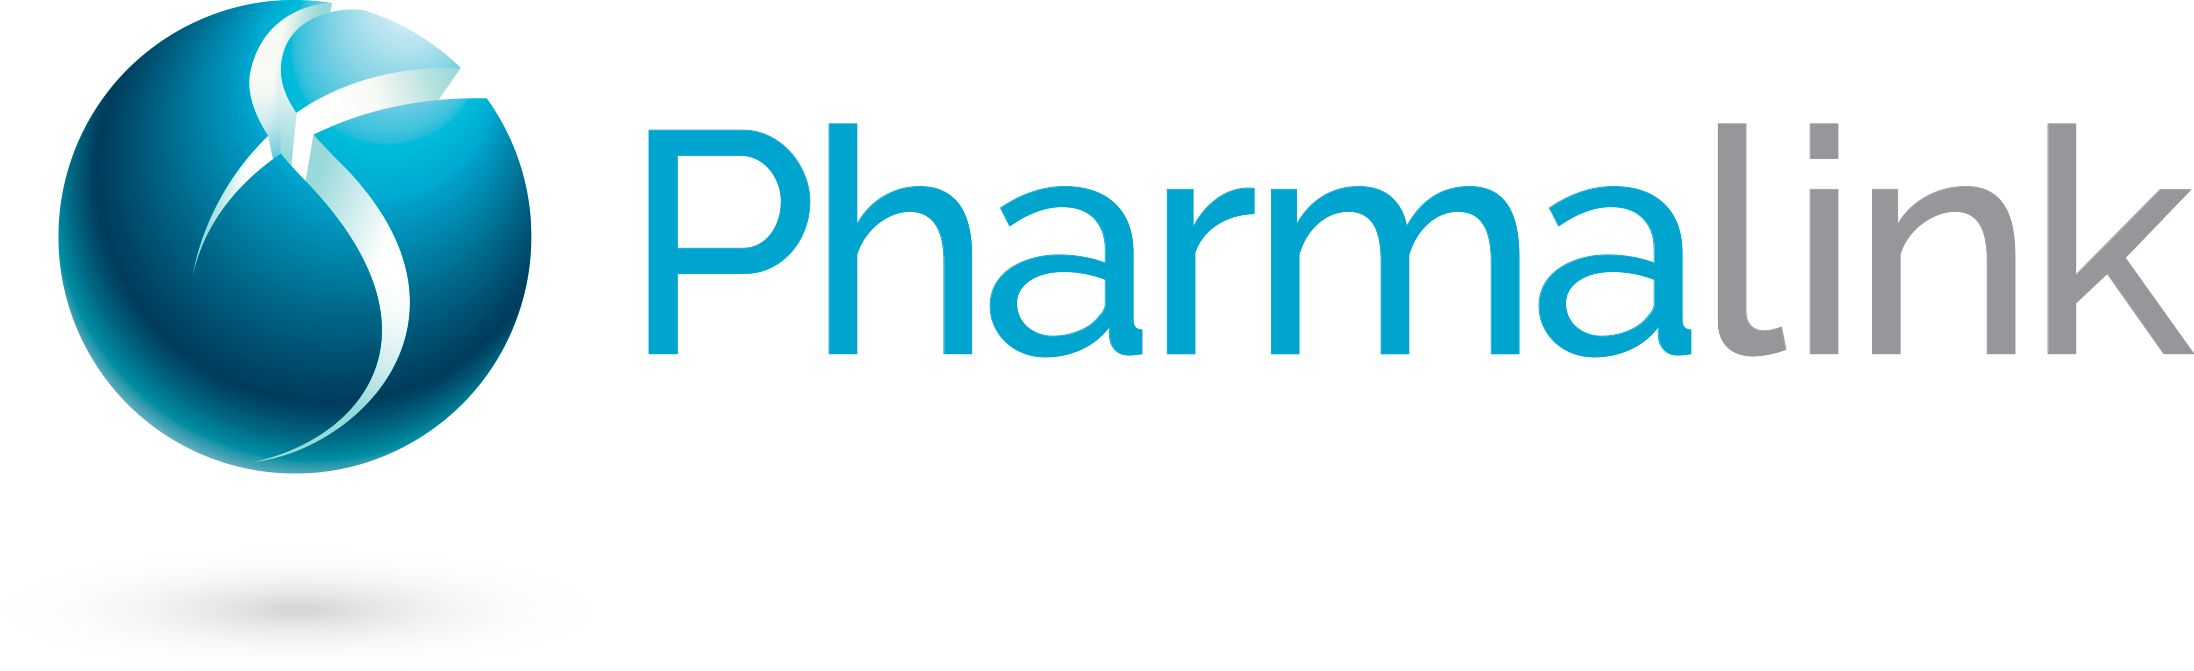 Pharmalink: Ready to Market Products